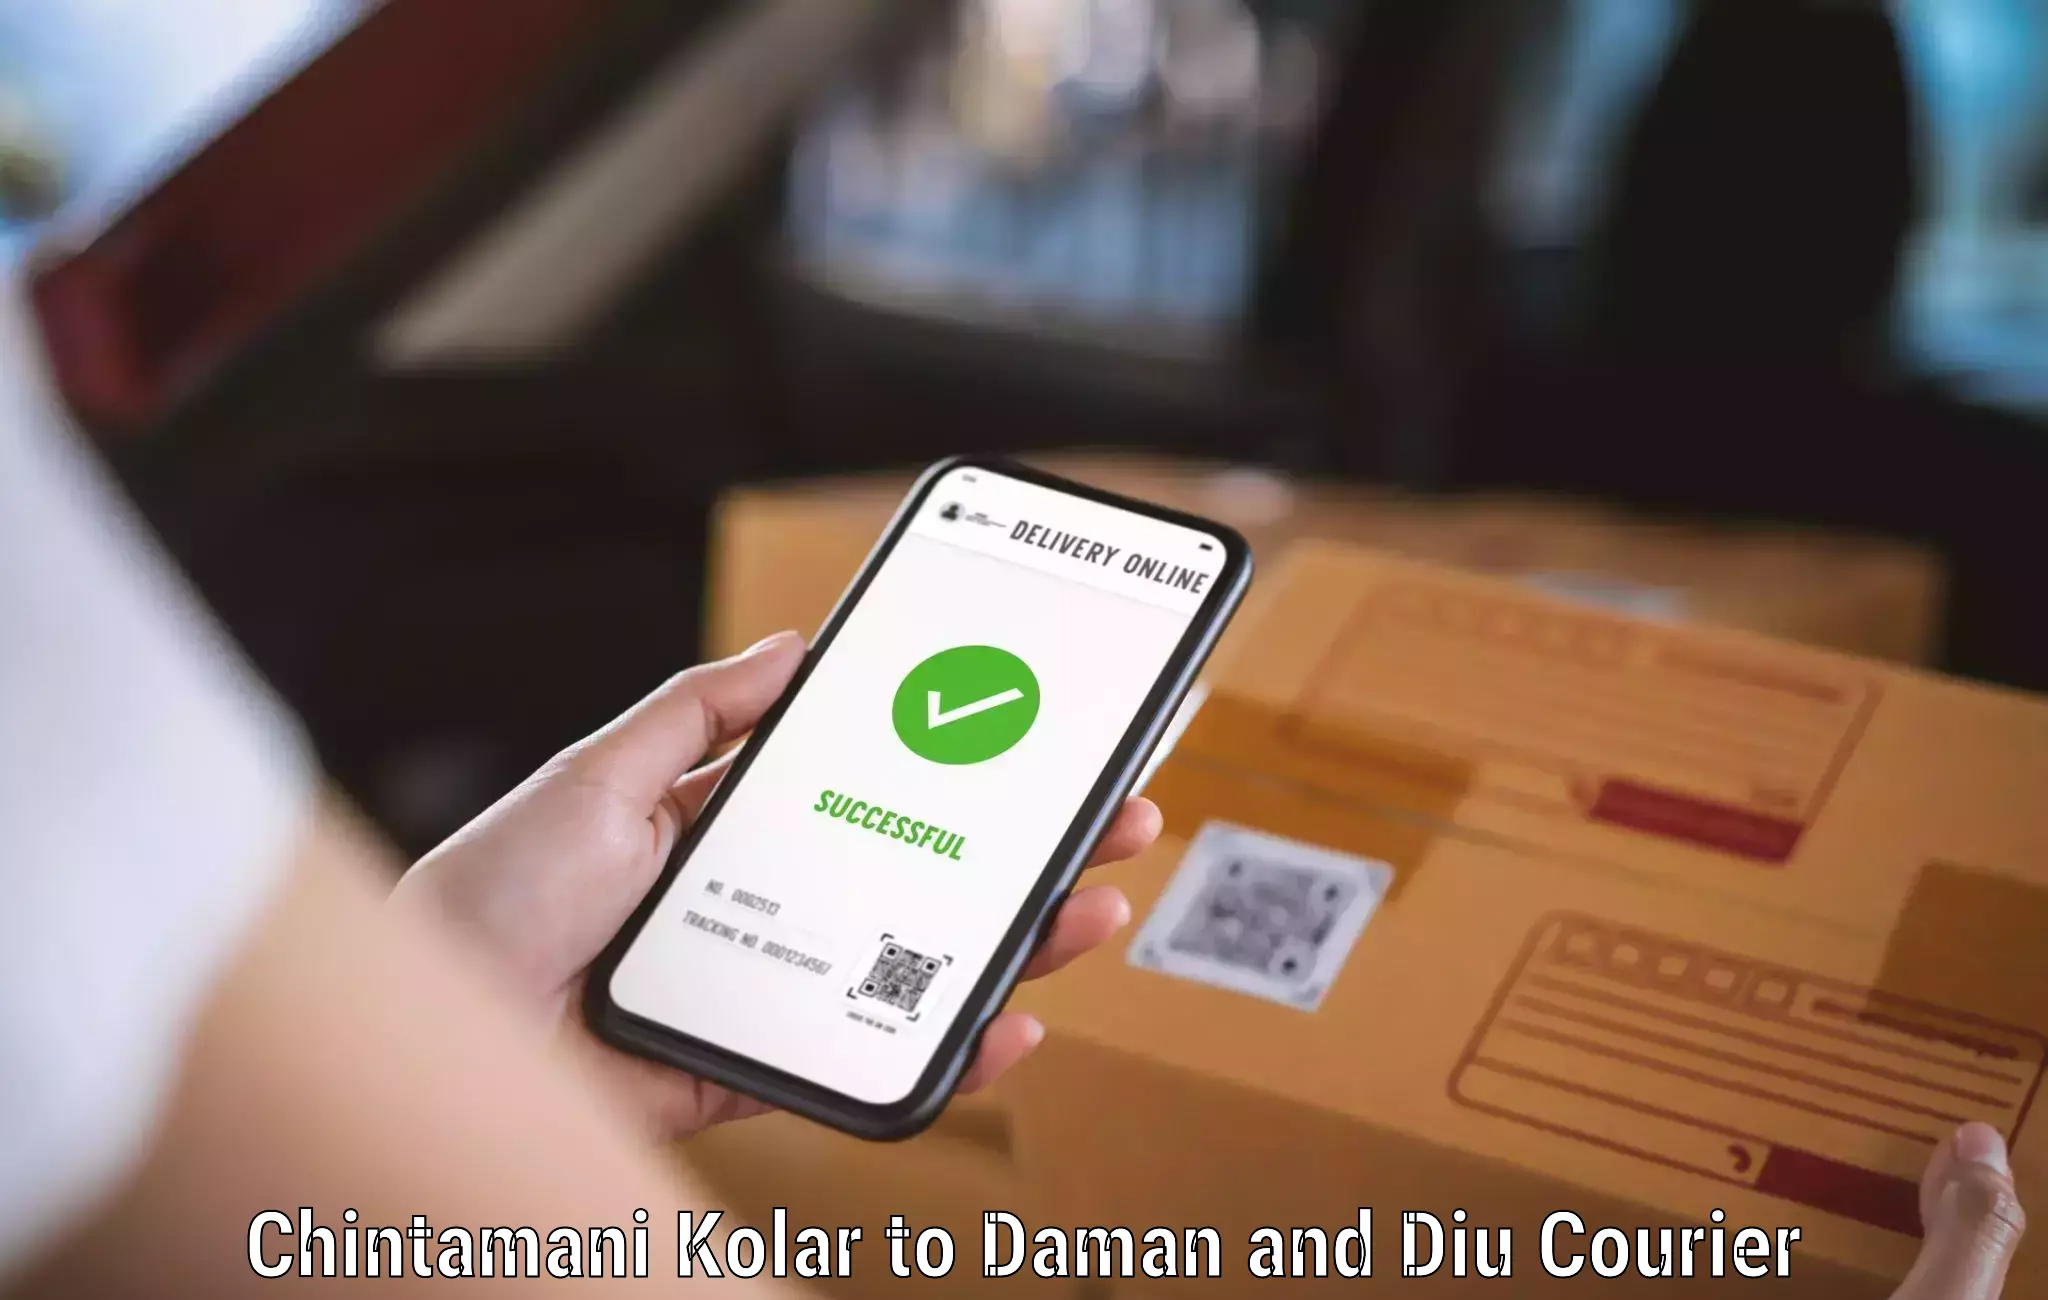 Versatile courier options Chintamani Kolar to Diu